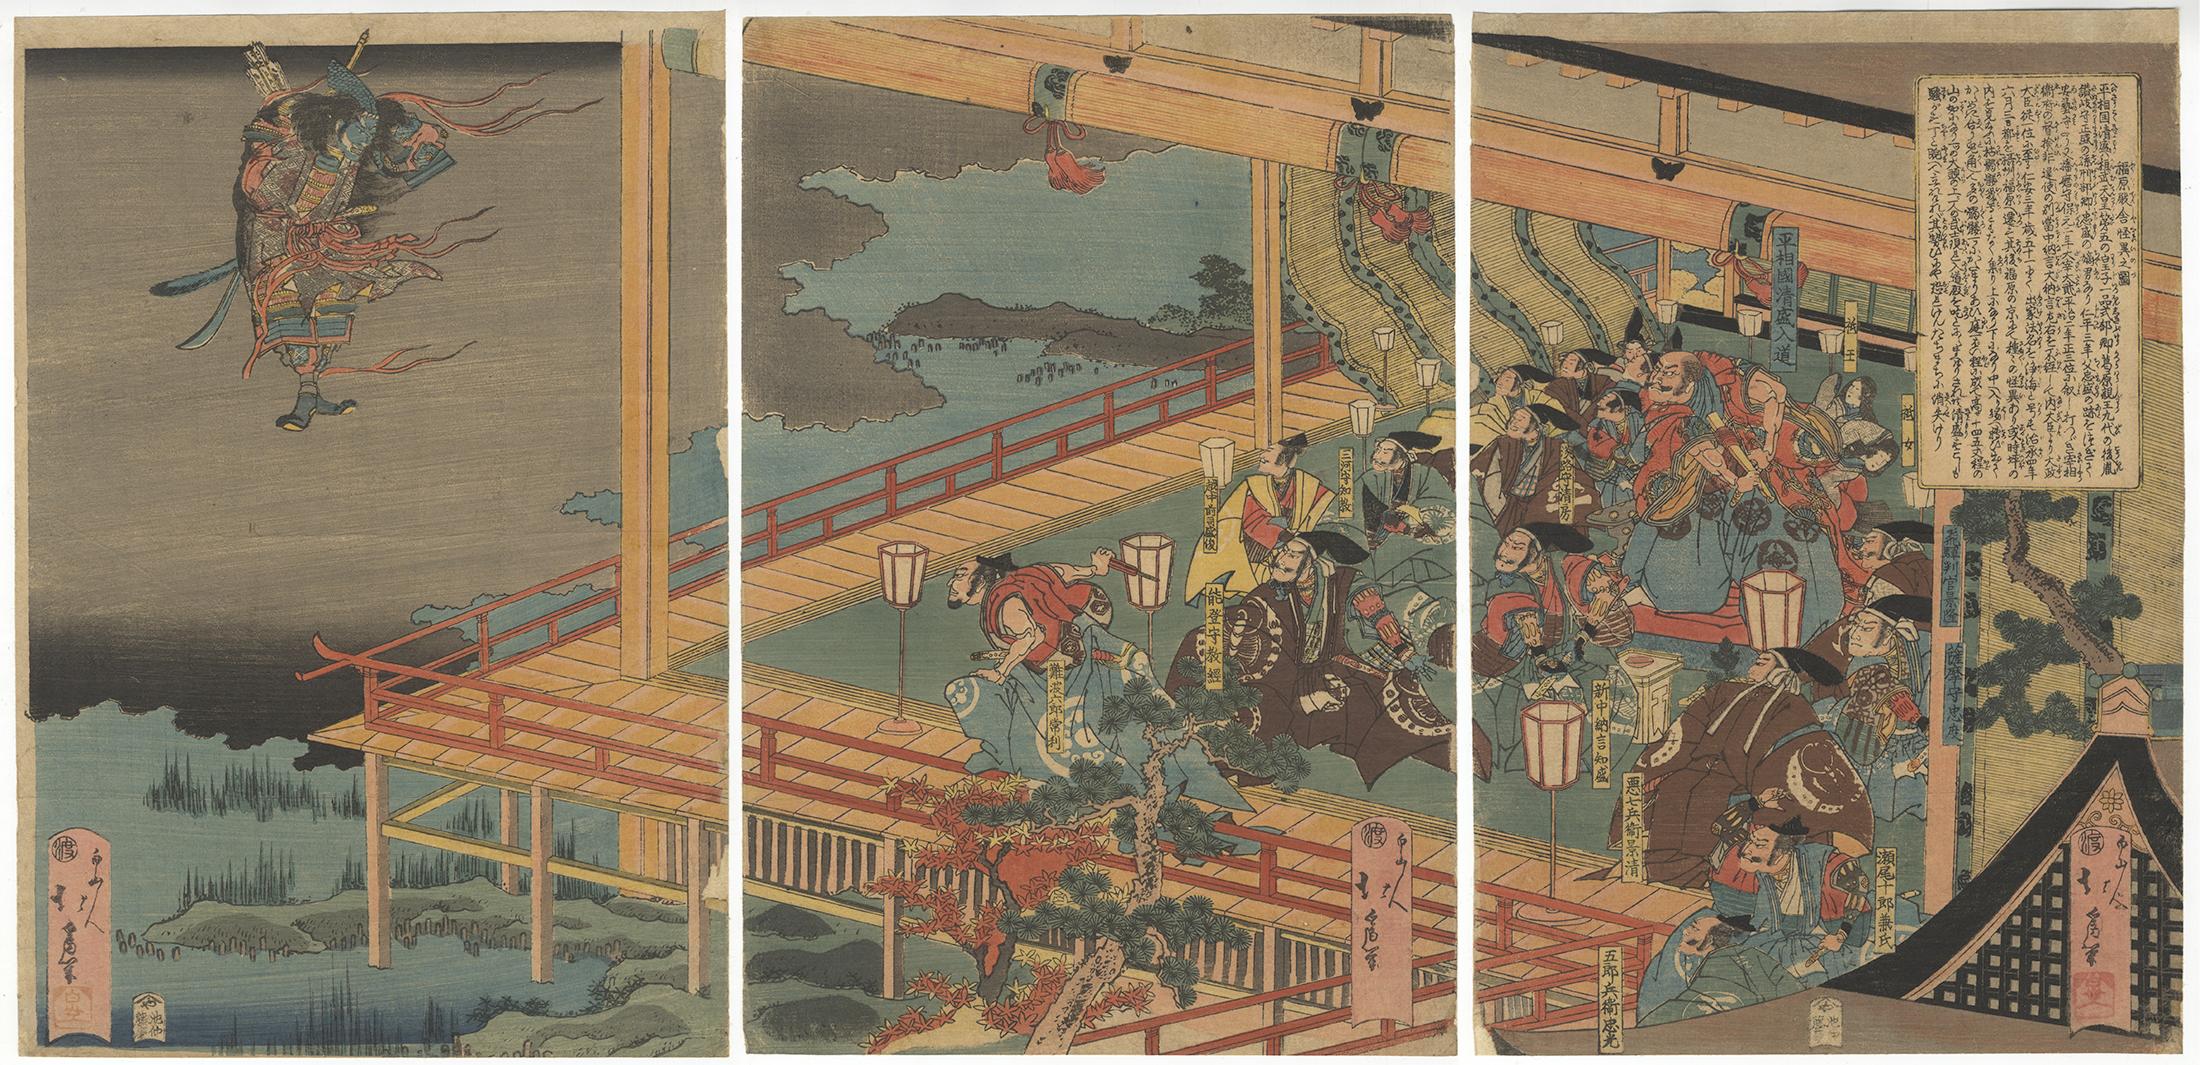 Artist:  Katsushika Hokui (active about 1830s–1870s)
Title: Strange Apparitions at the Fukuhara Palace
Date: 1843 - 1844
Publisher: Fujiokaya Keijiro
Size: (L) 25.5 x 37.4, (C) 25.6 x 37.1, (R) 25.4 x 37.2 cm
Condition report: Slightly rimmed, light